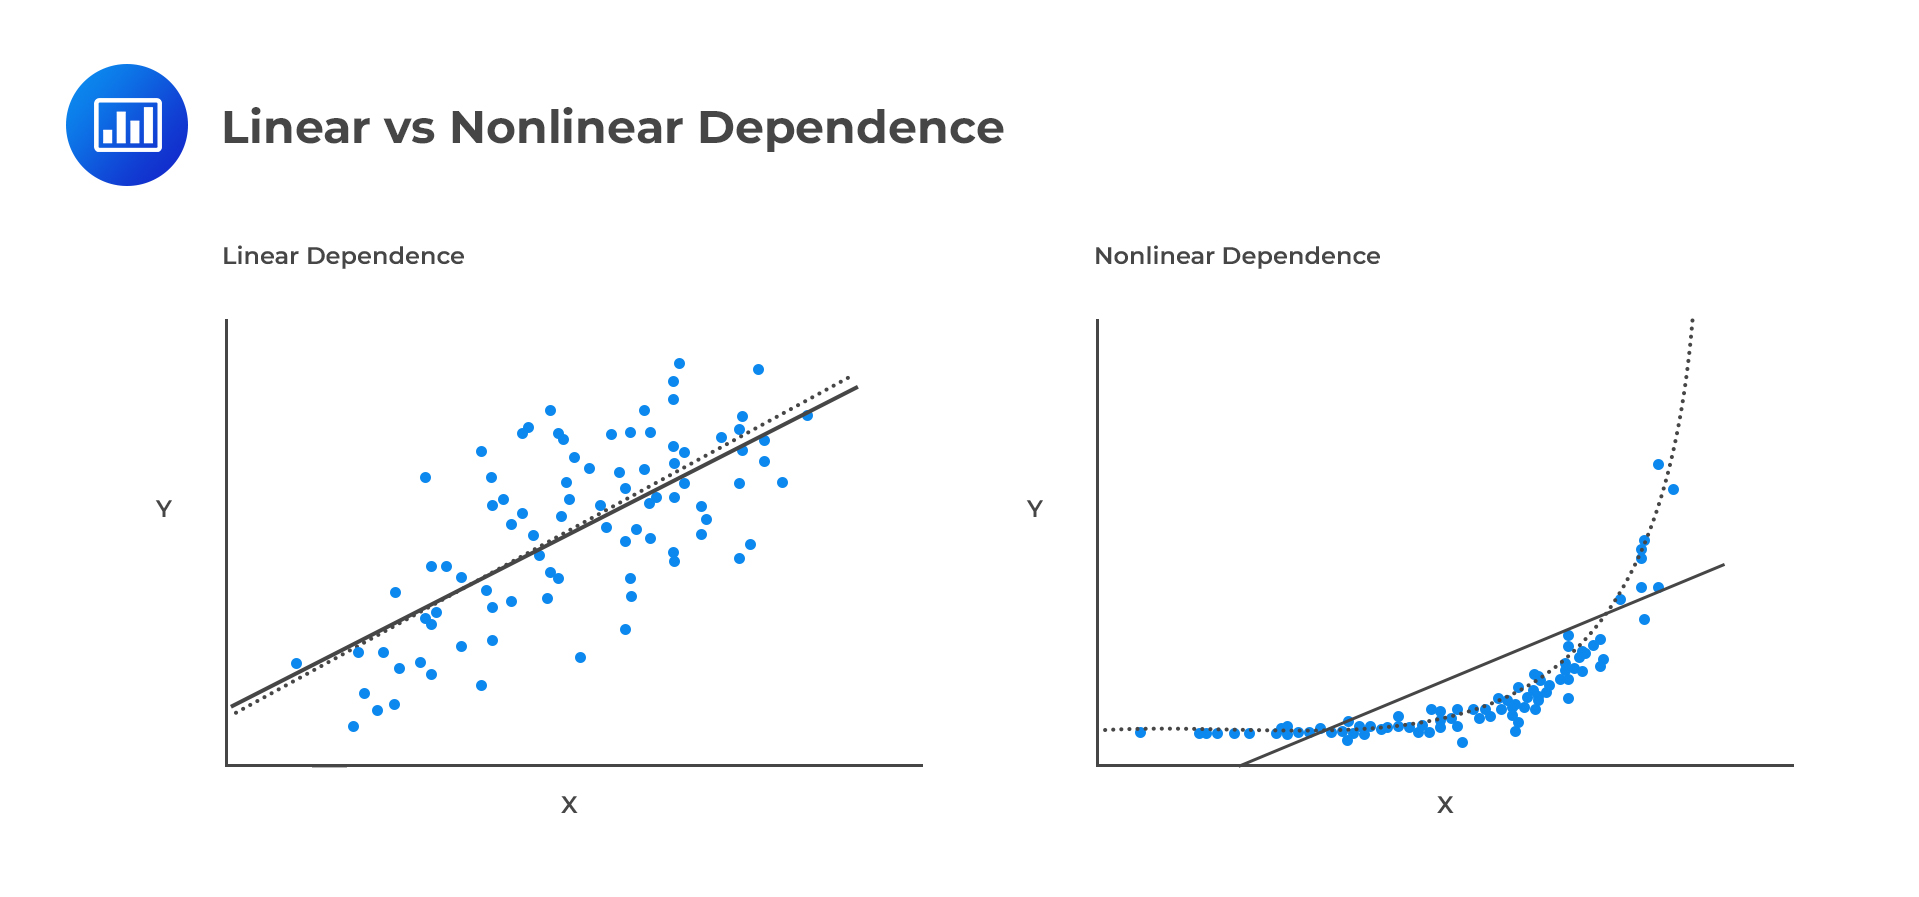 Linear vs Nonlinear Dependence